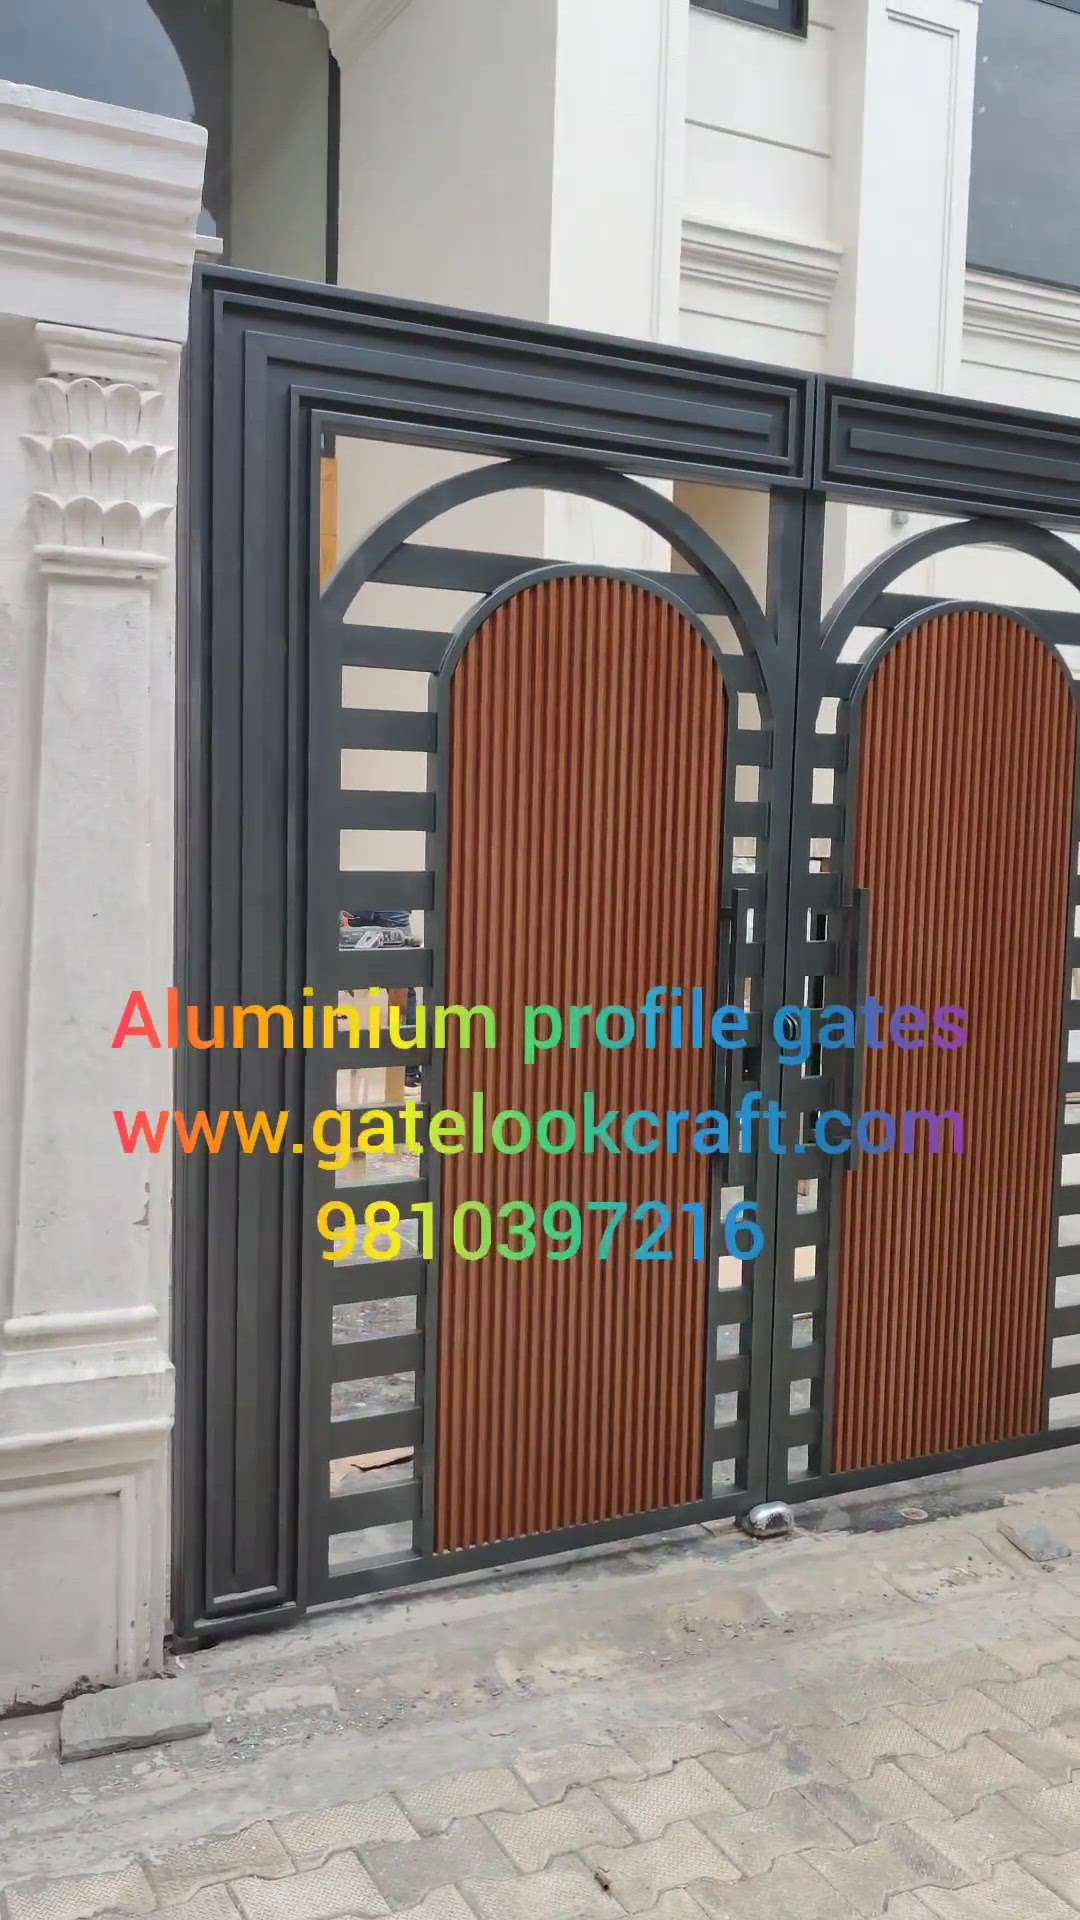 Aluminium profile gates by Hibza sterling interiors pvt ltd #gatelookcraft #art #architecture #architectgatedesign #architect #viral #aluminiumprofilegates #gates #maingates #fancygates #modulargates #powdercoating #pvdcoating